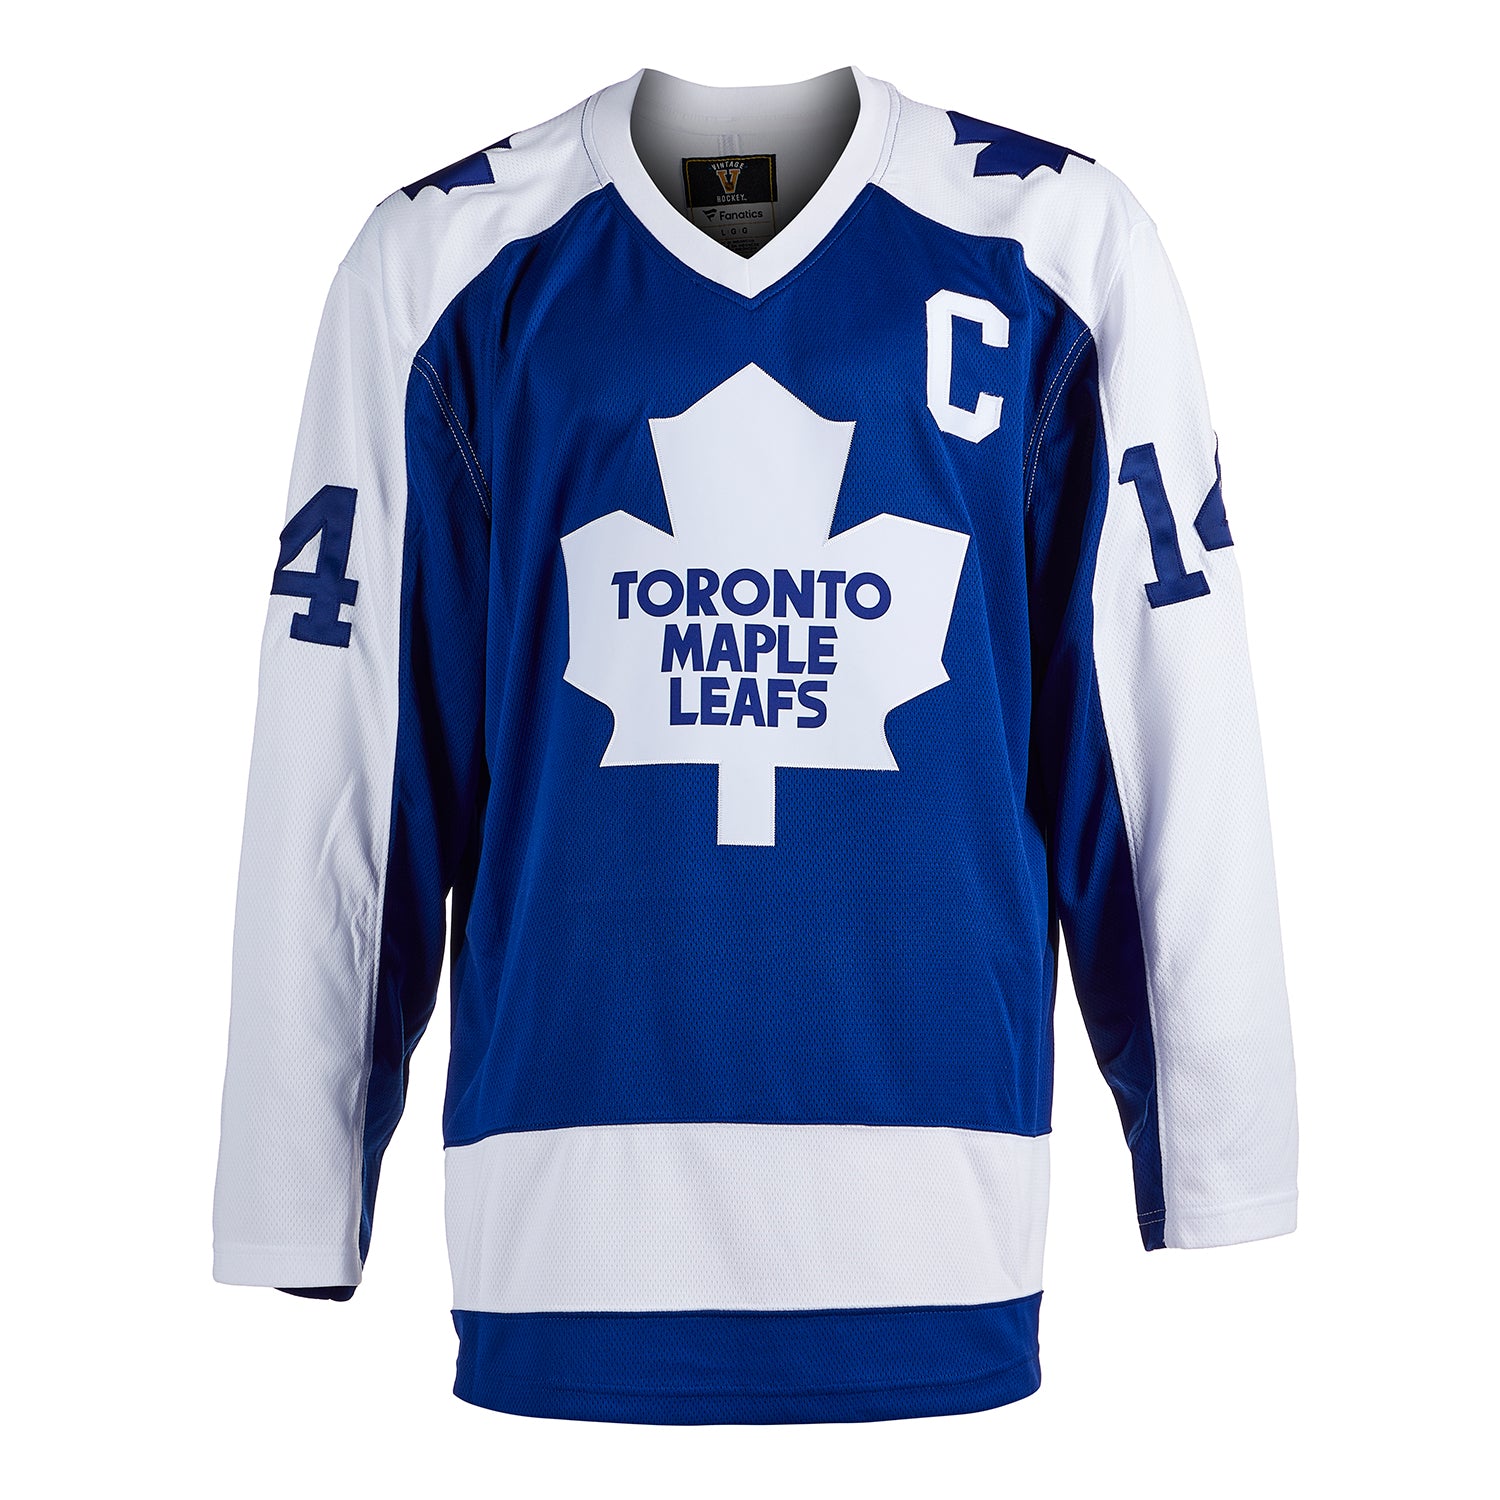 NHL, Shirts, Authentic Toronto Maple Leafs Hockey Jersey